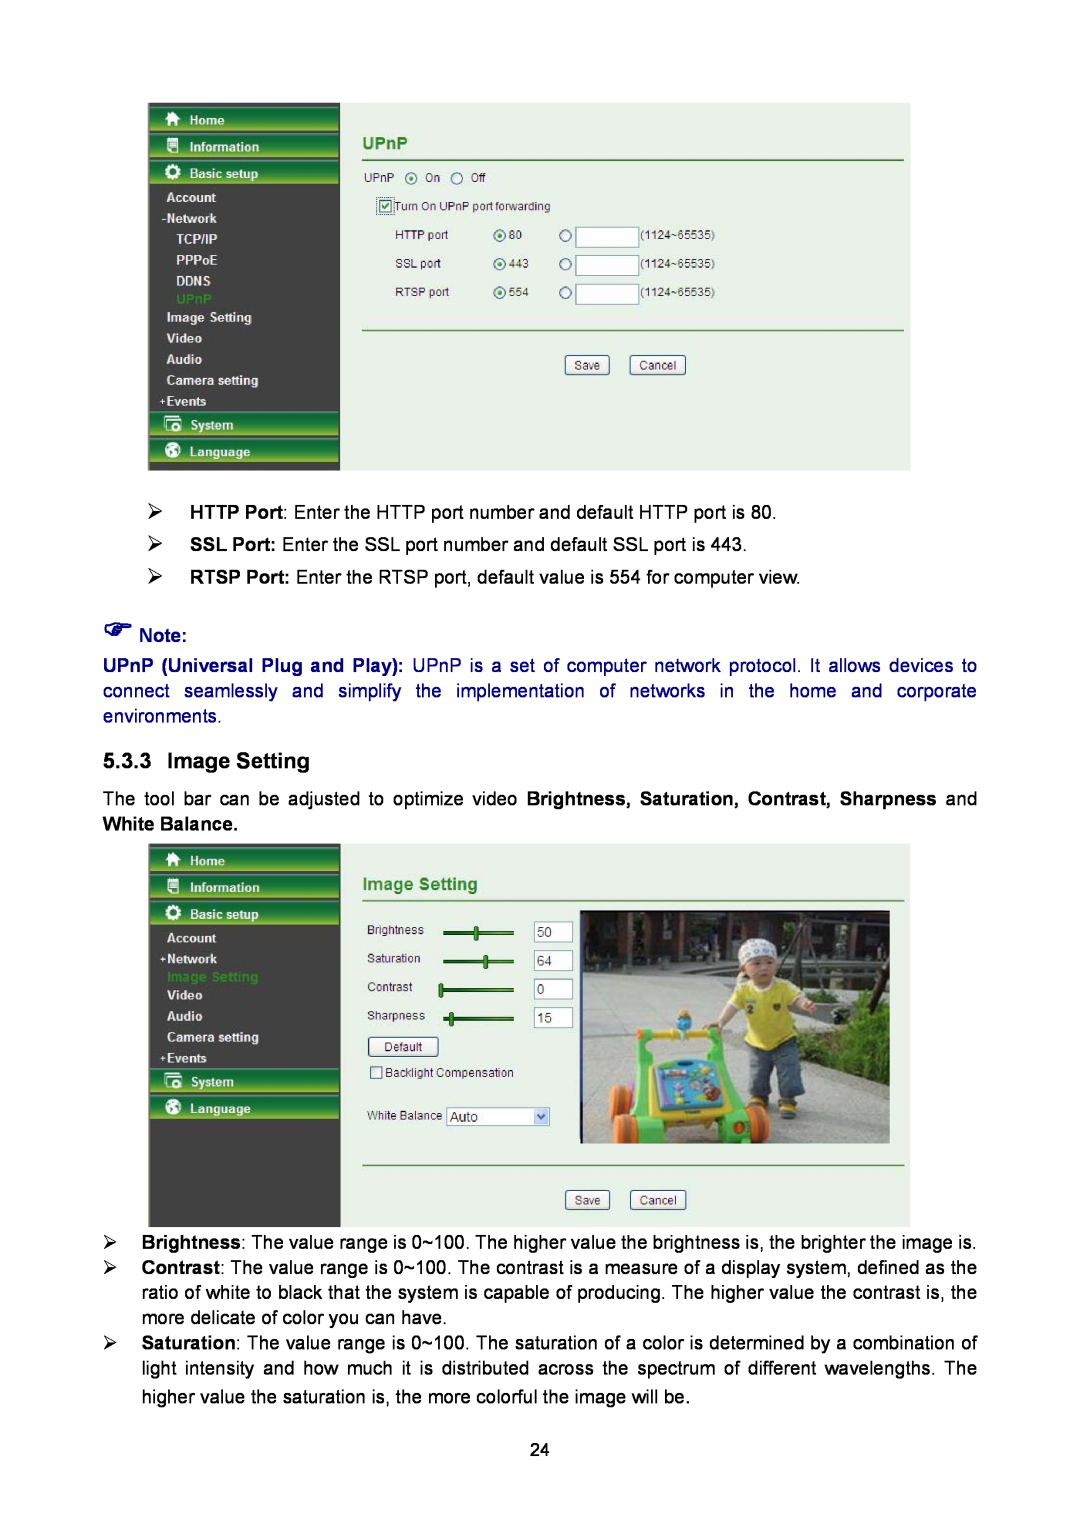 TP-Link TL-SC2020 manual Image Setting,  Note, White Balance 